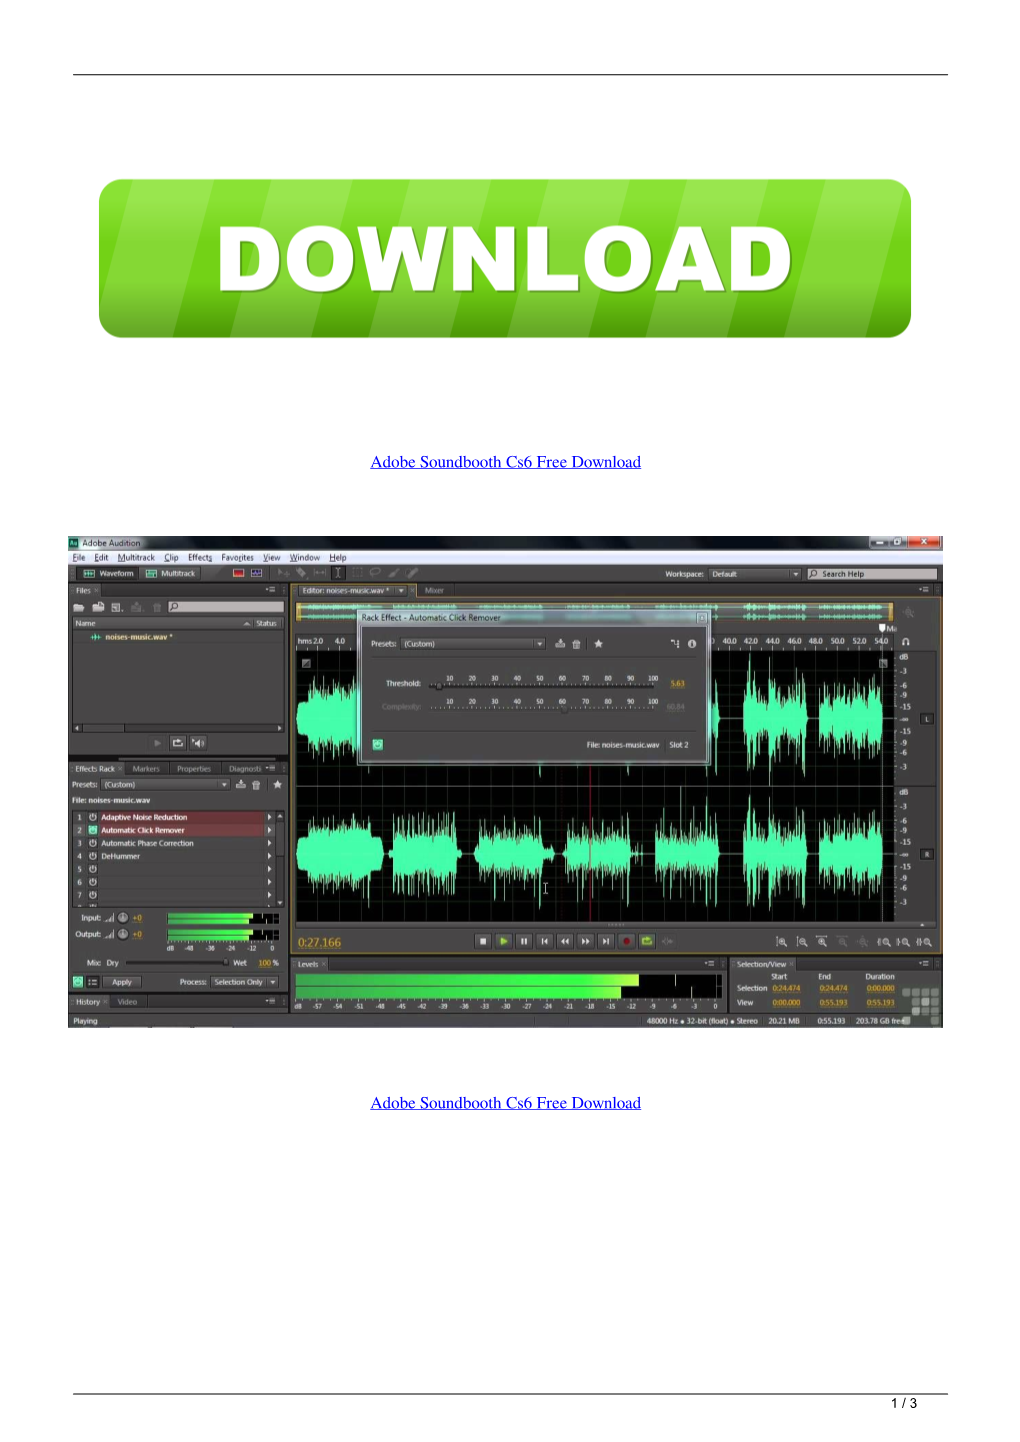 Adobe Soundbooth Cs6 Free Download